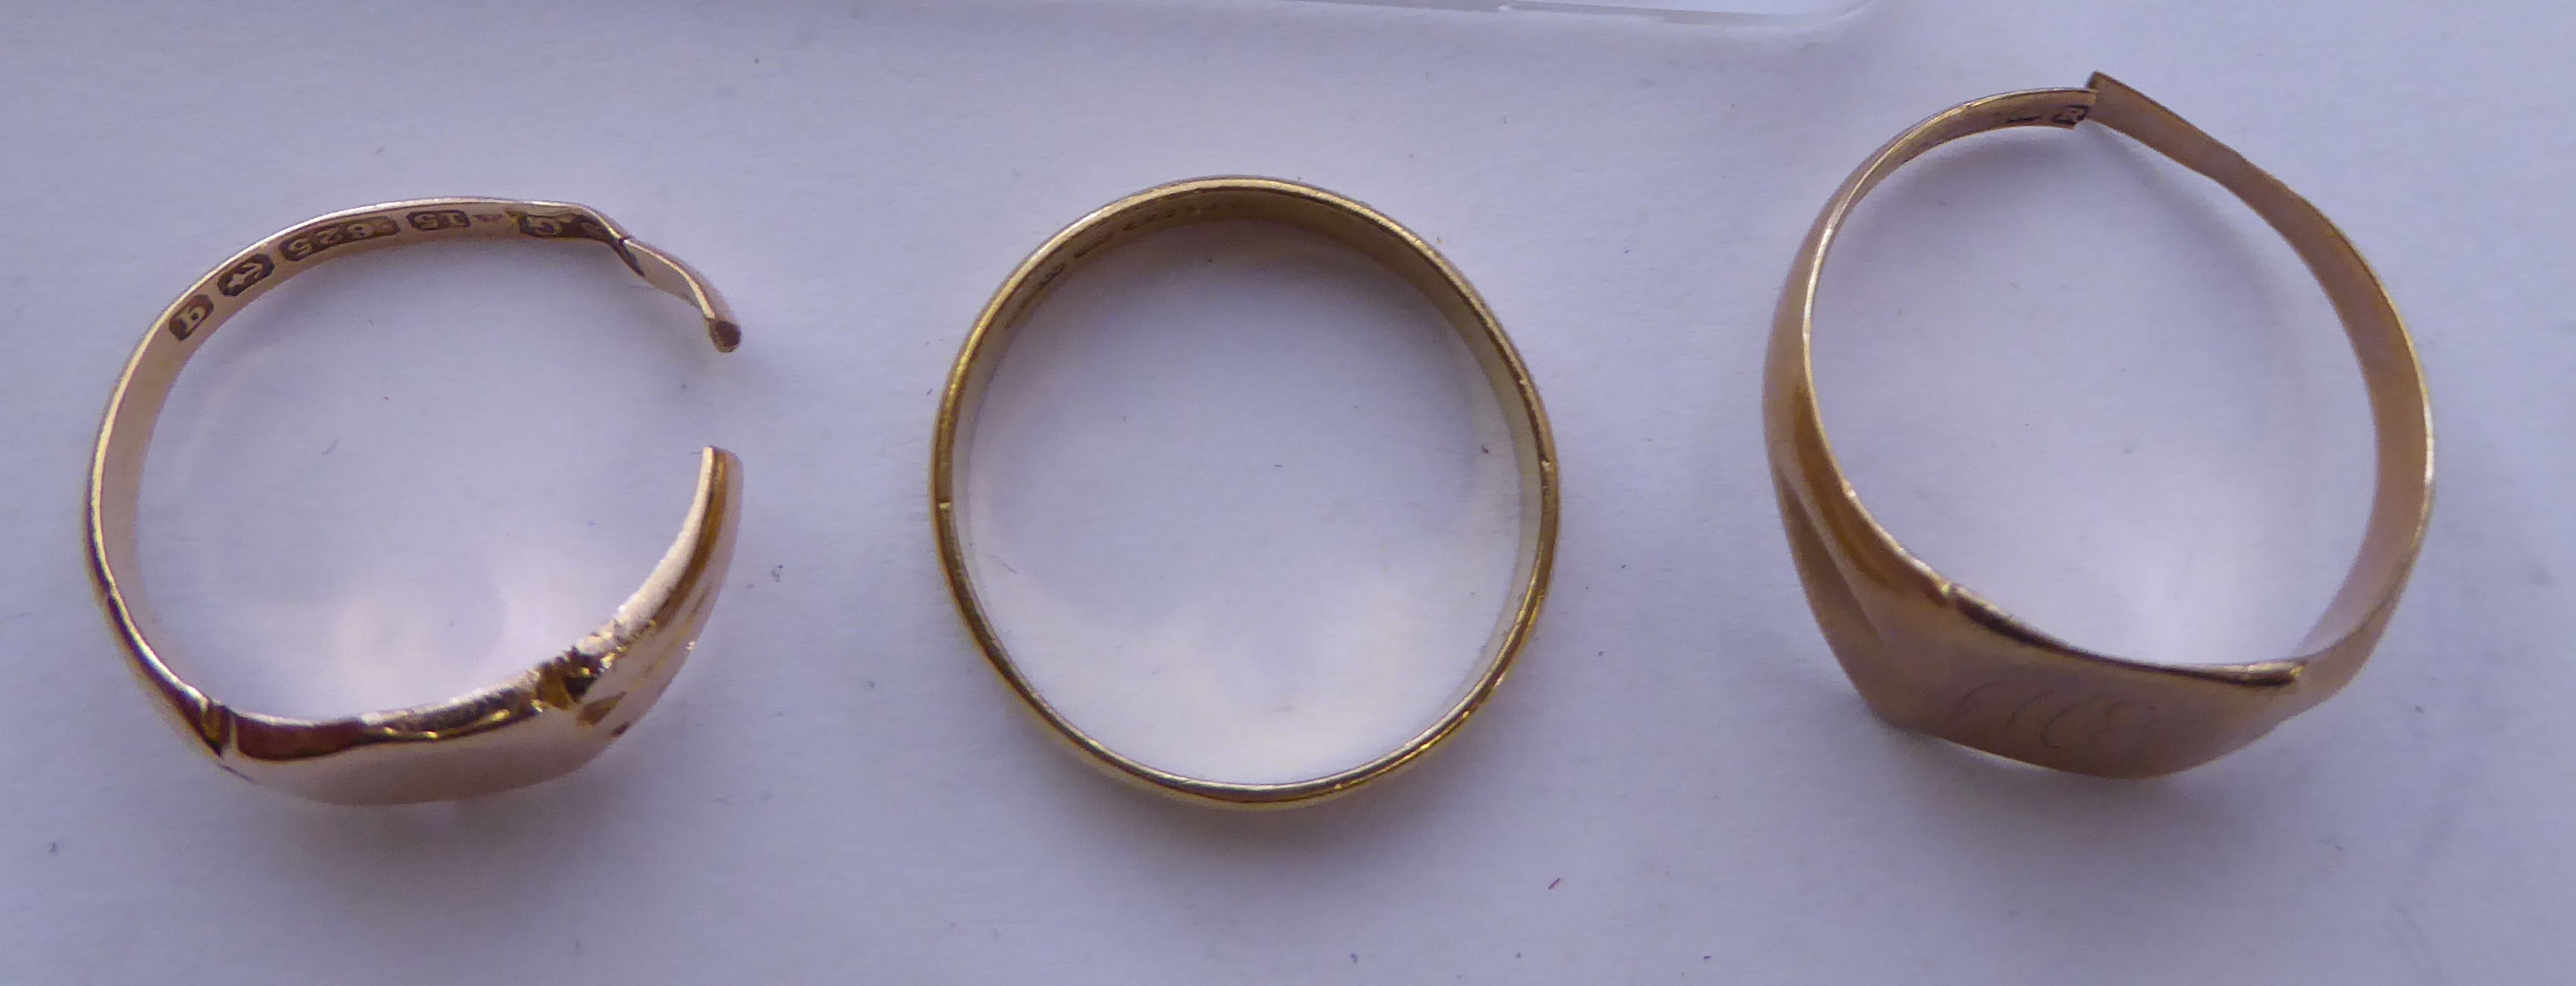 A (broken) 15ct gold signet ring; a (broken) 9ct gold signet ring; - Image 2 of 2